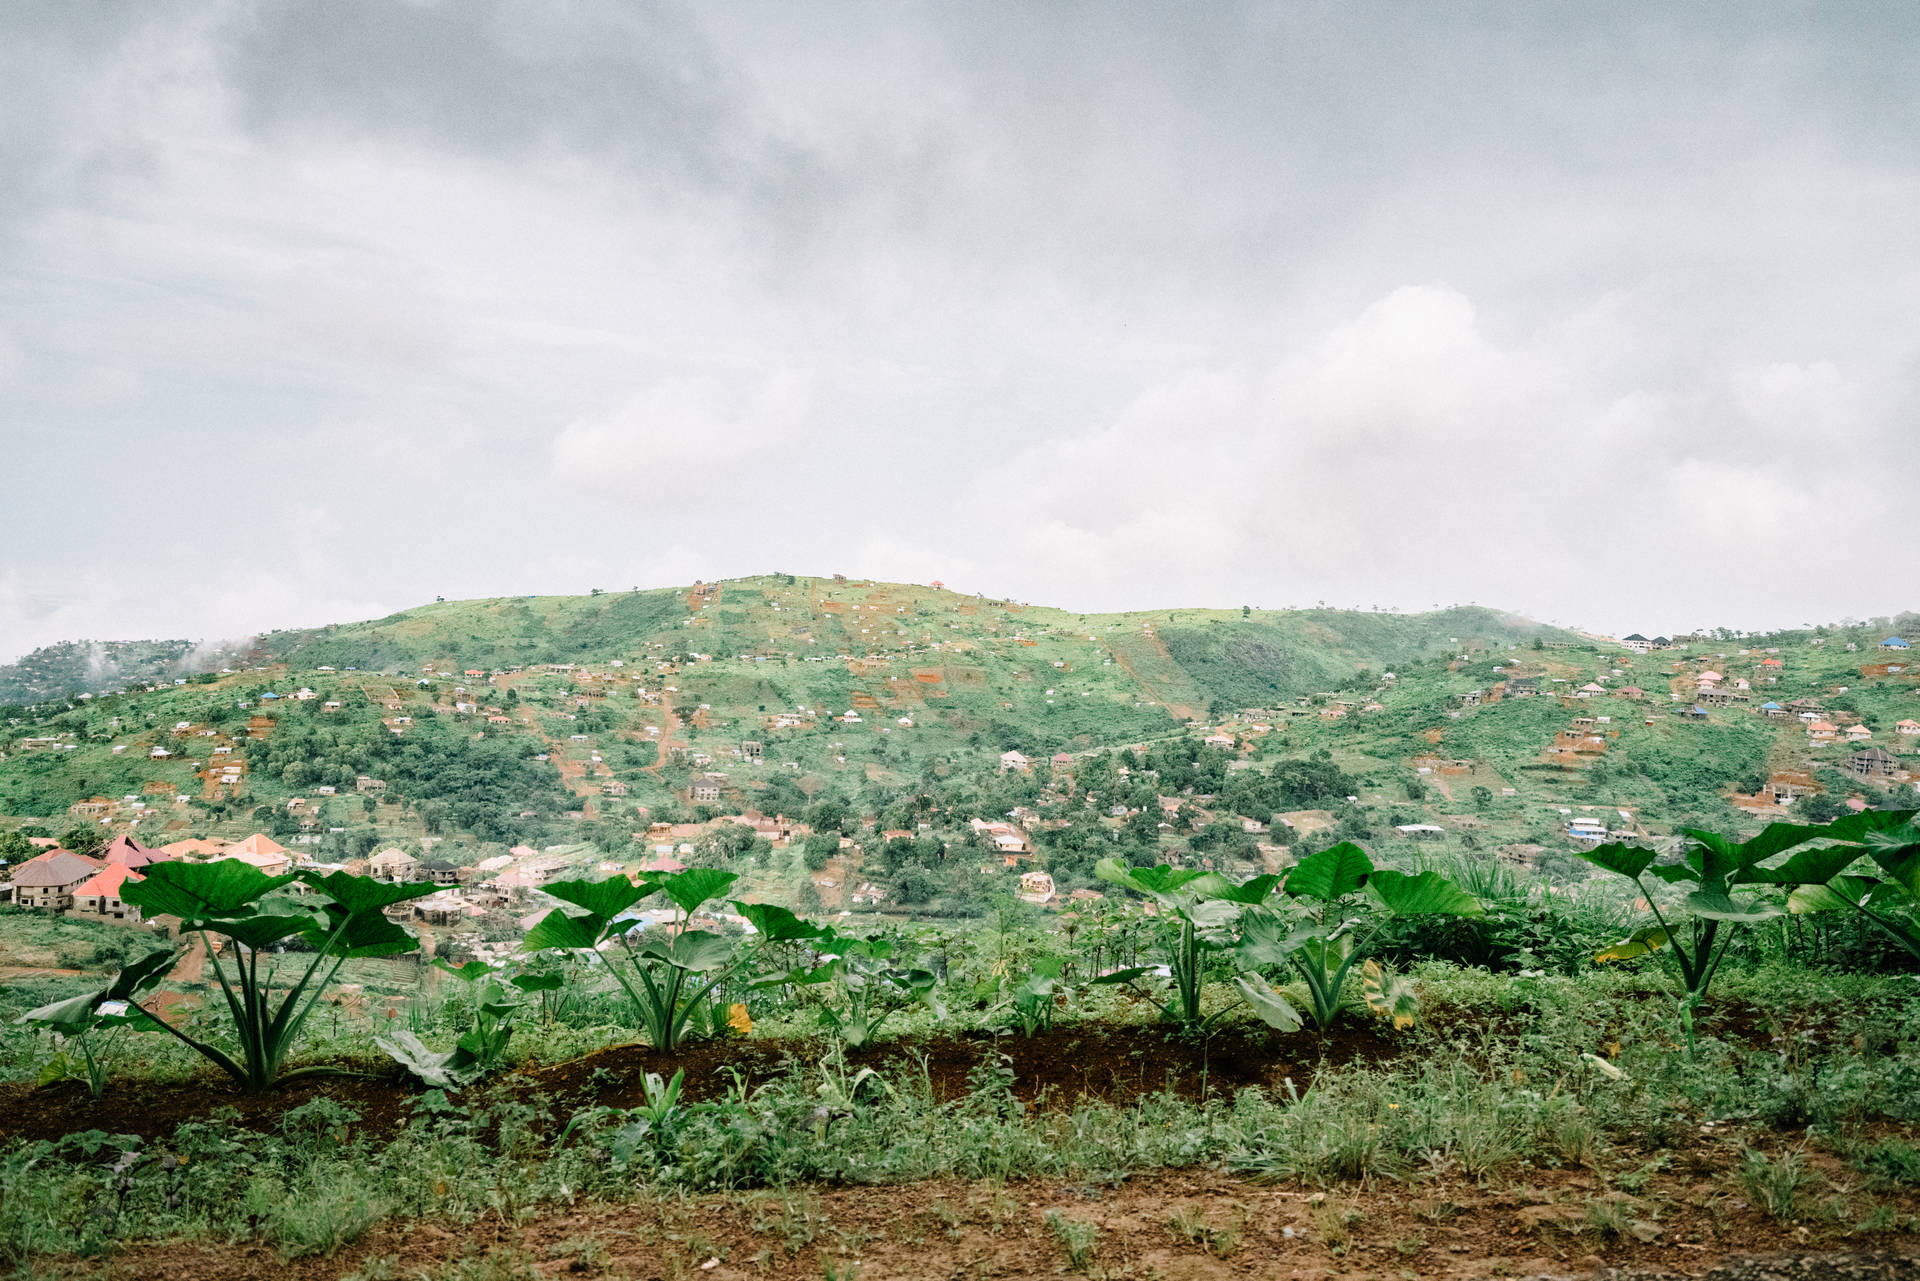 Grassy Green Hill In Sierra Leone Background